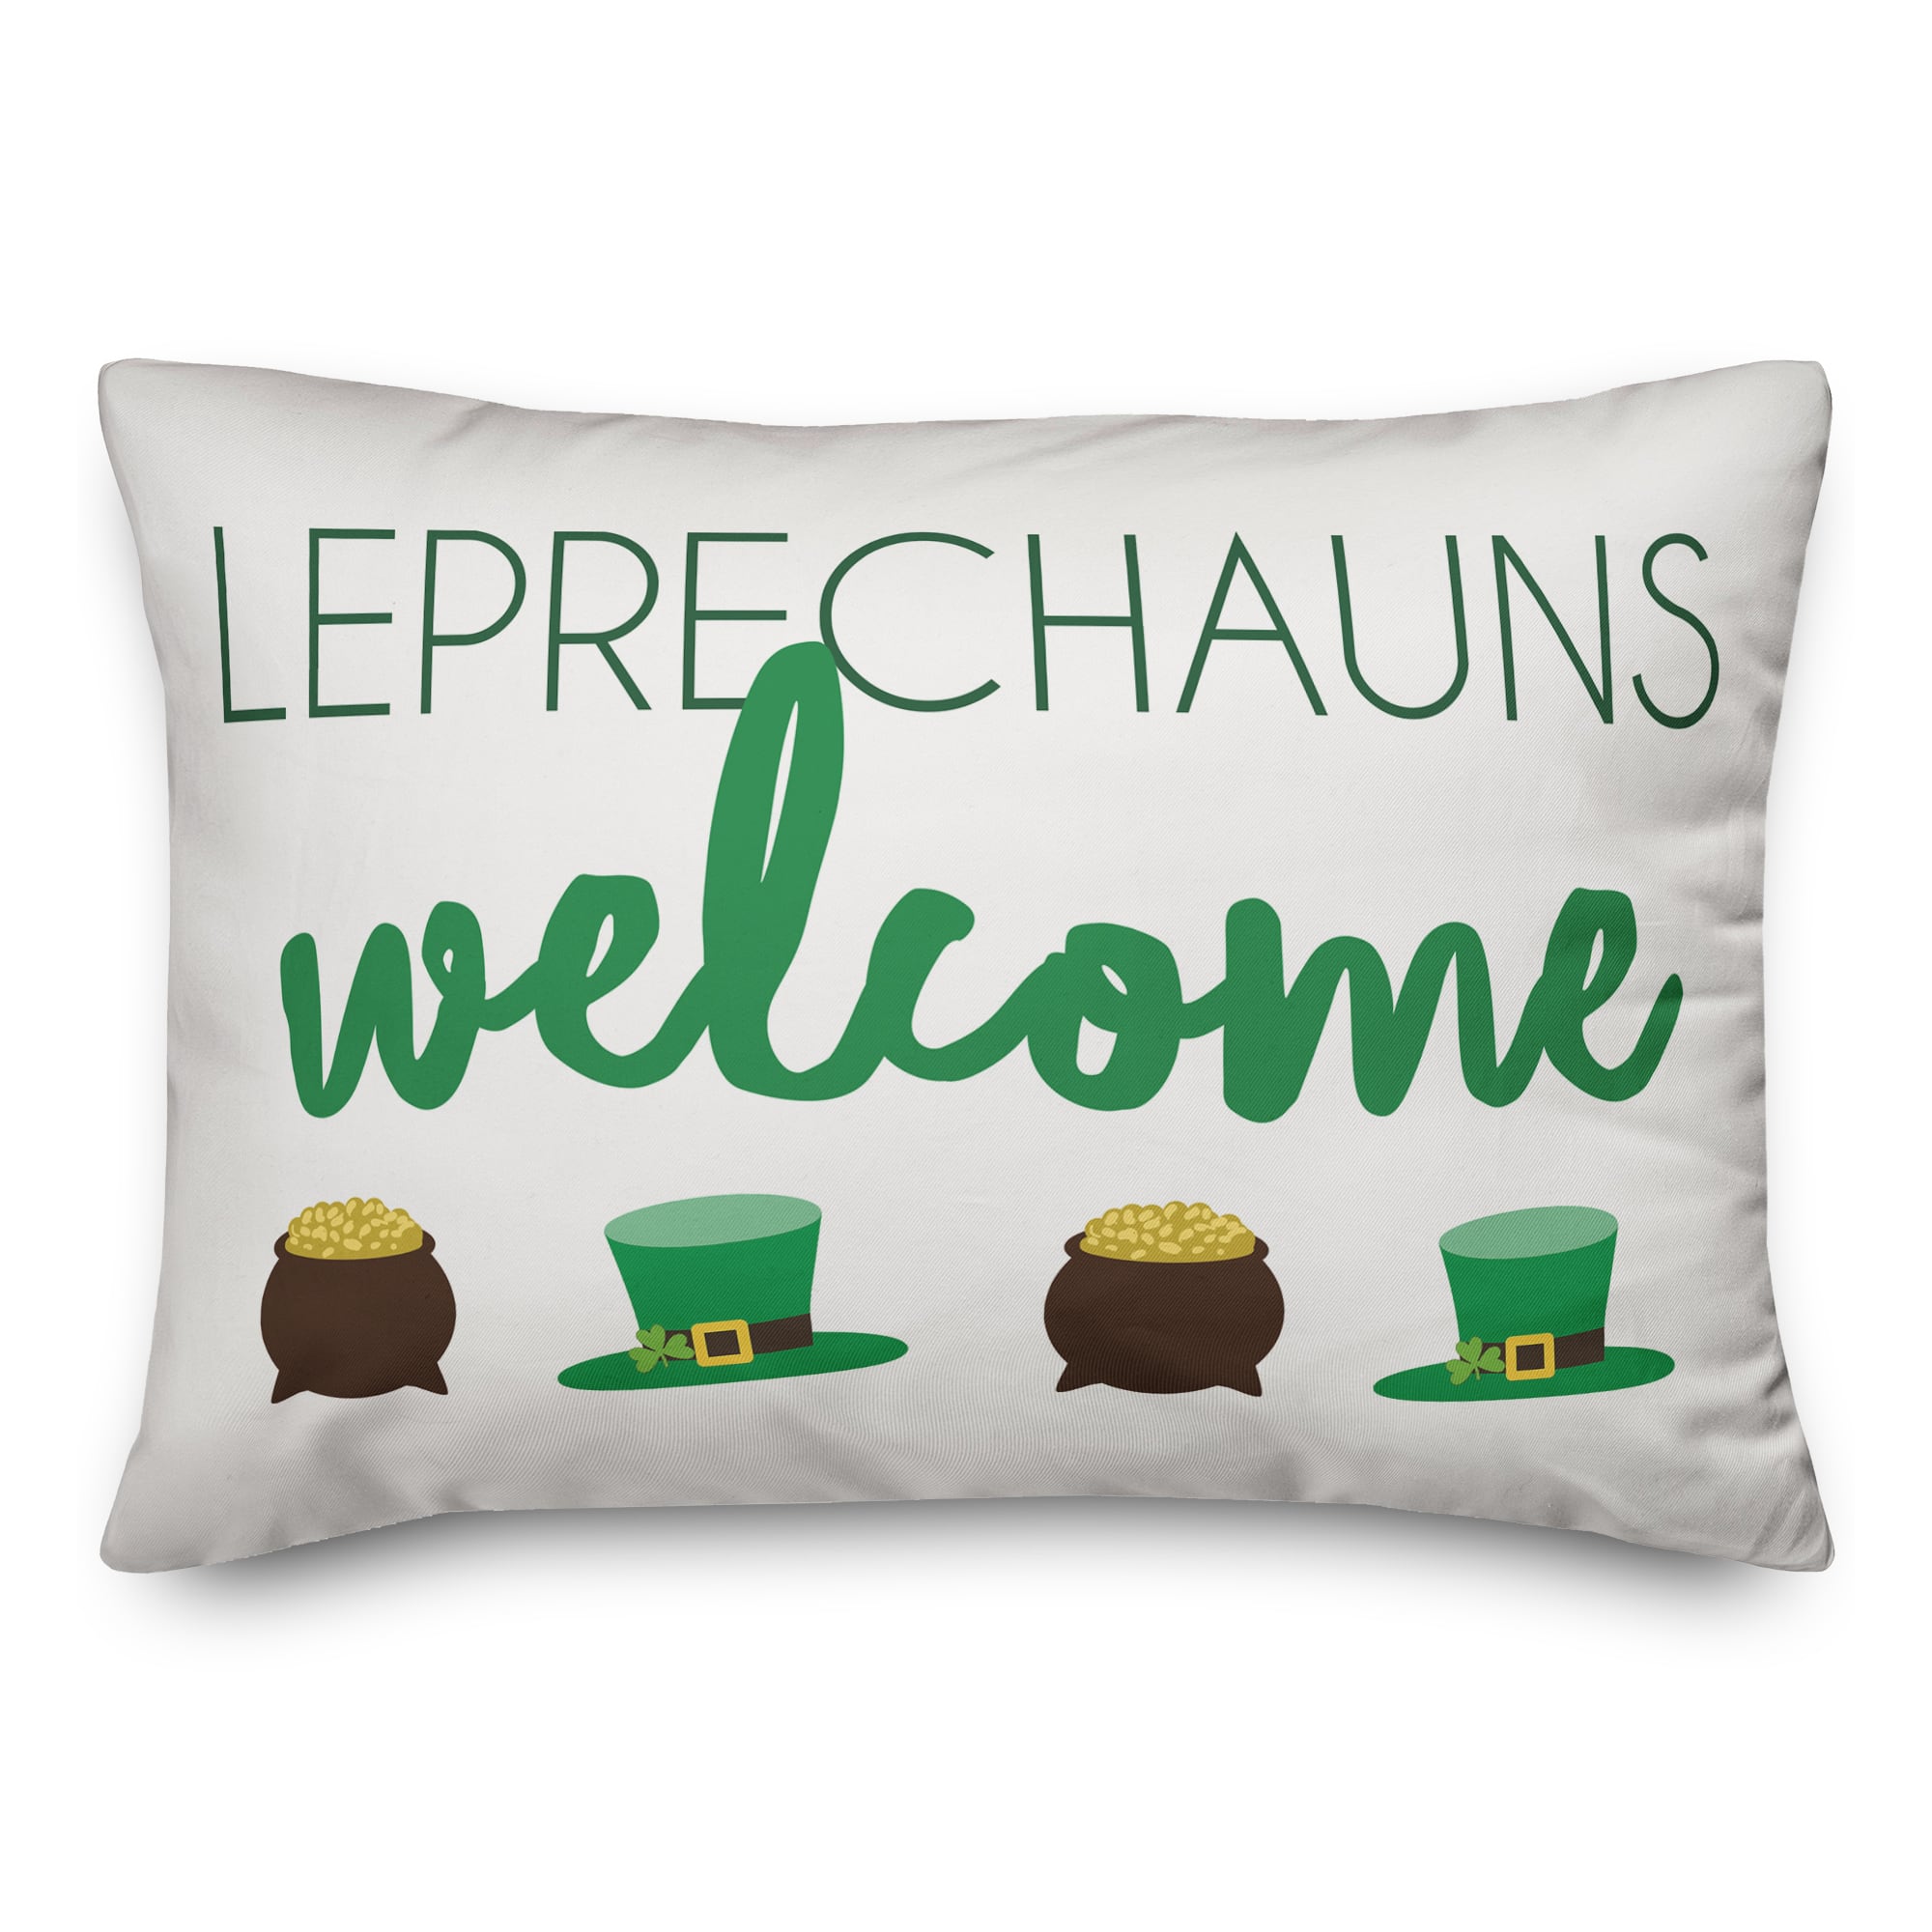 Leprechauns Welcome Throw Pillow